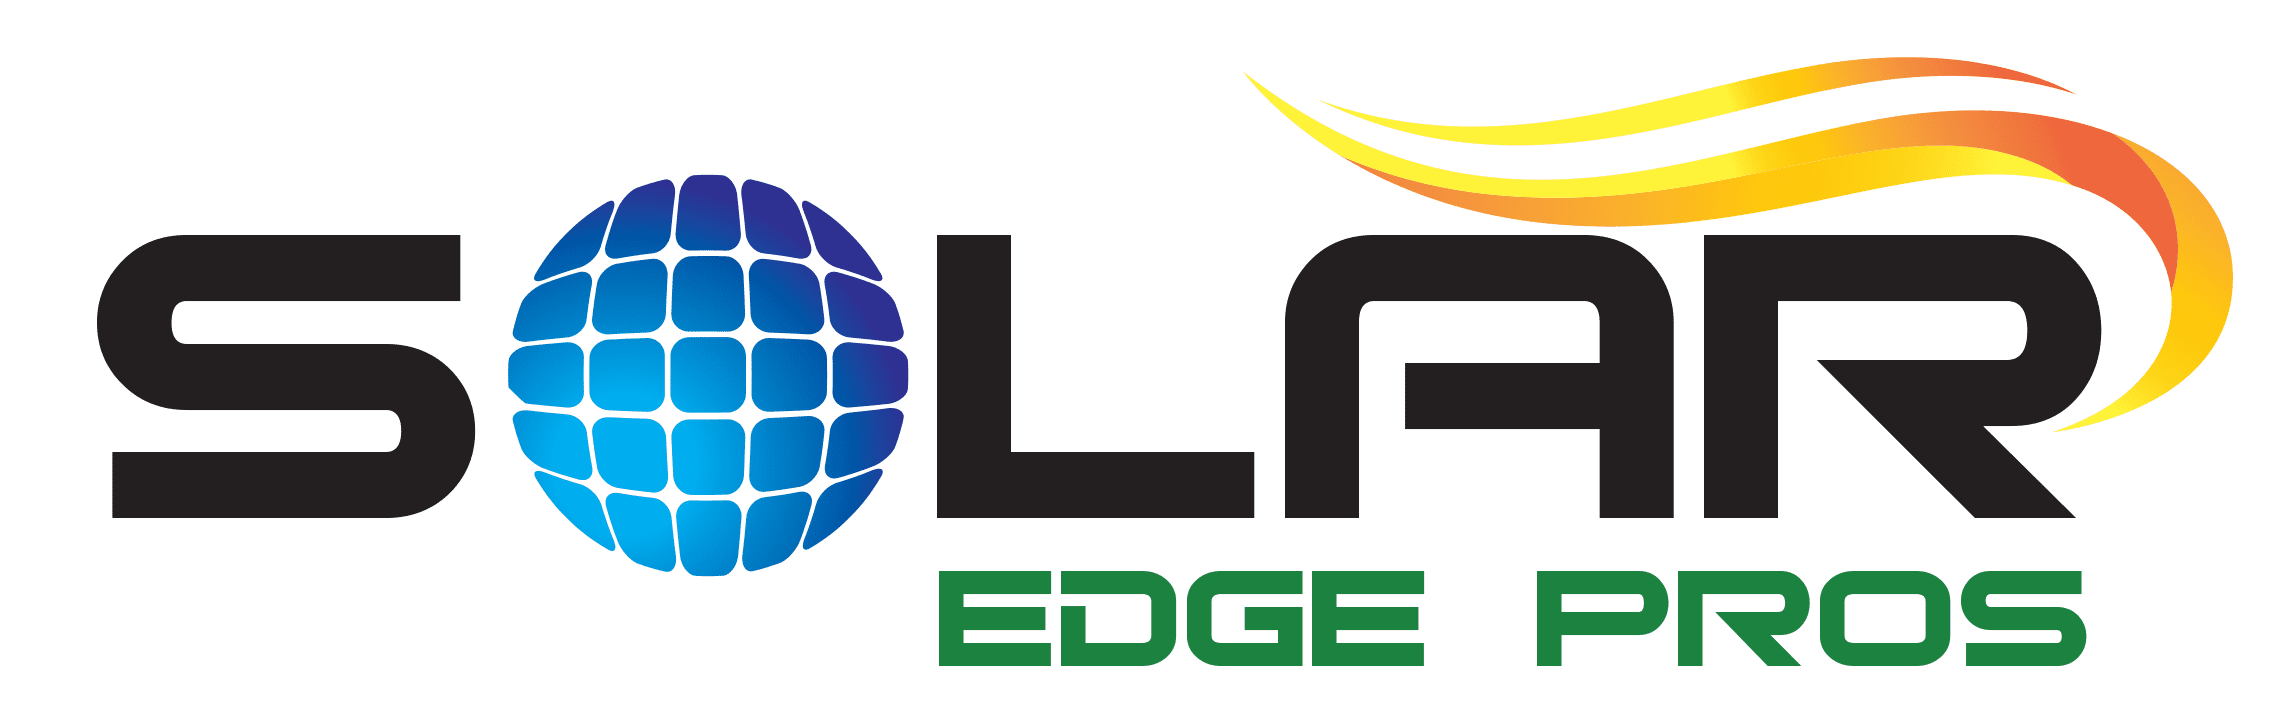 Solar-Edge-Pro-Logo-015-2 Final Horizontal